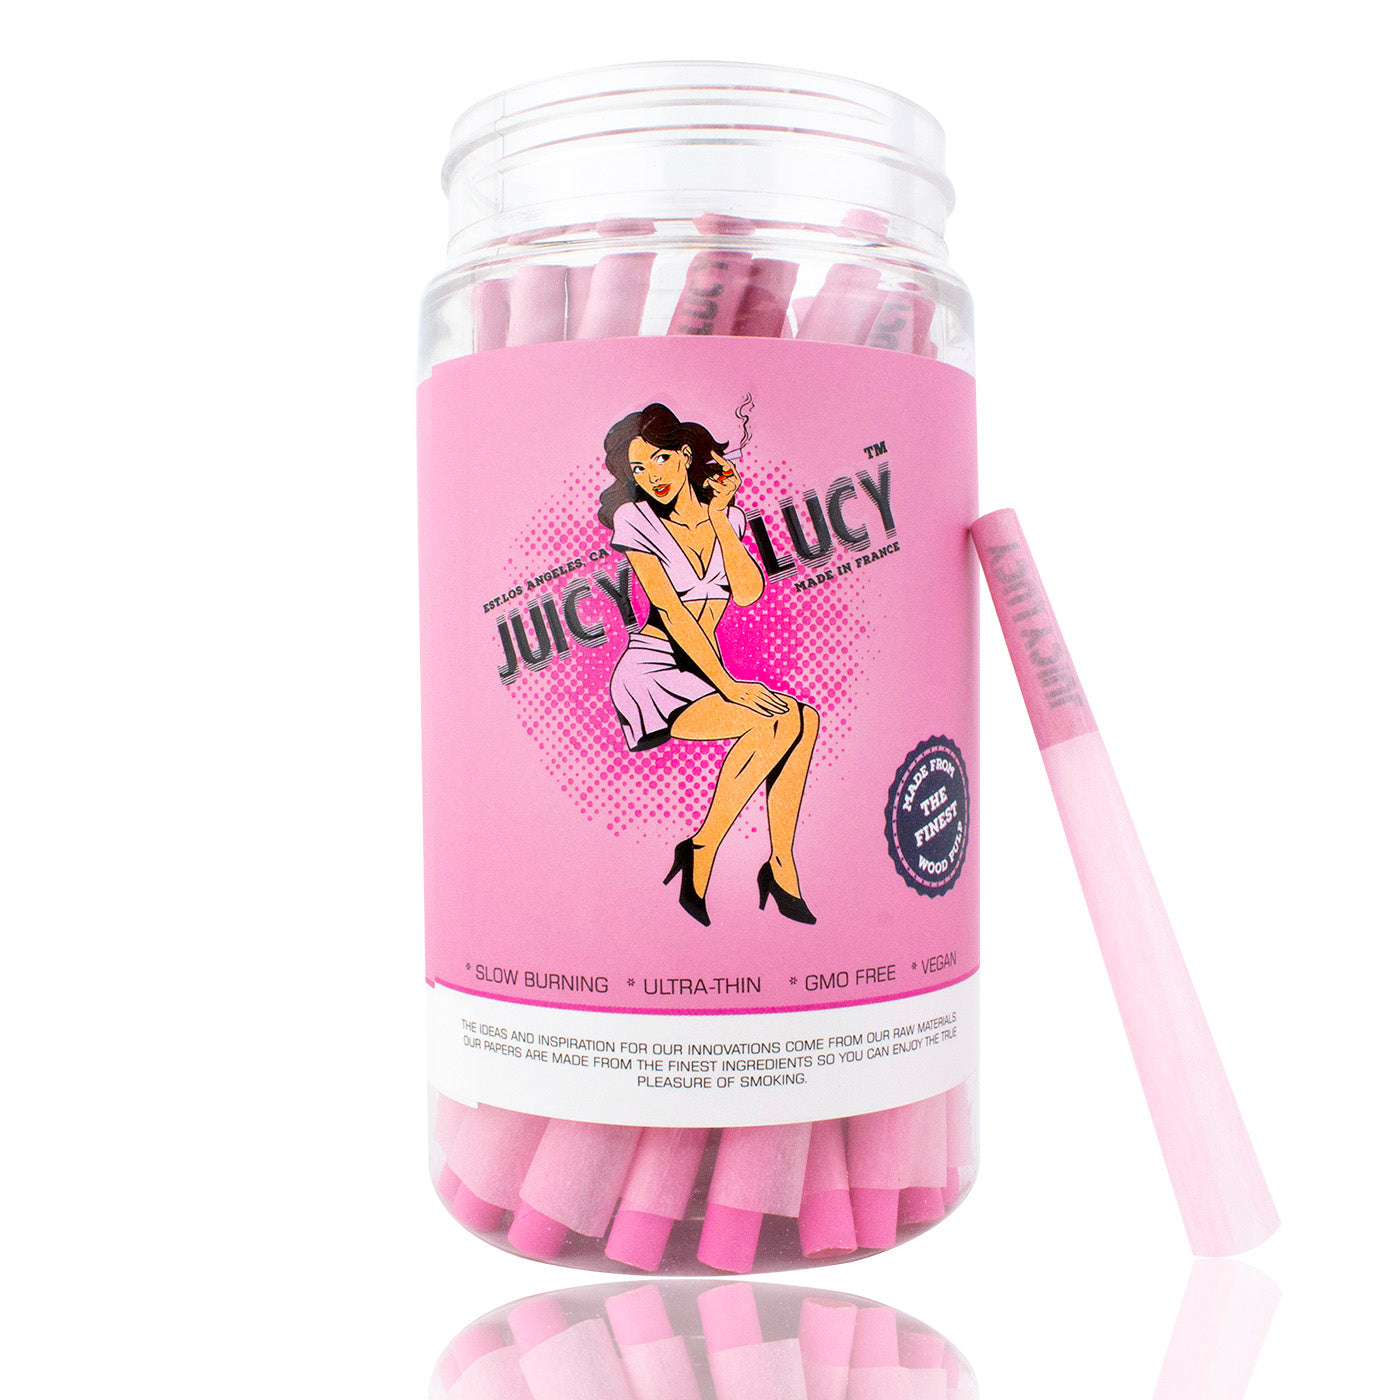 Stokes Juicy Lucy Pink Cones 1 1/4 Size (Jar 50ct)